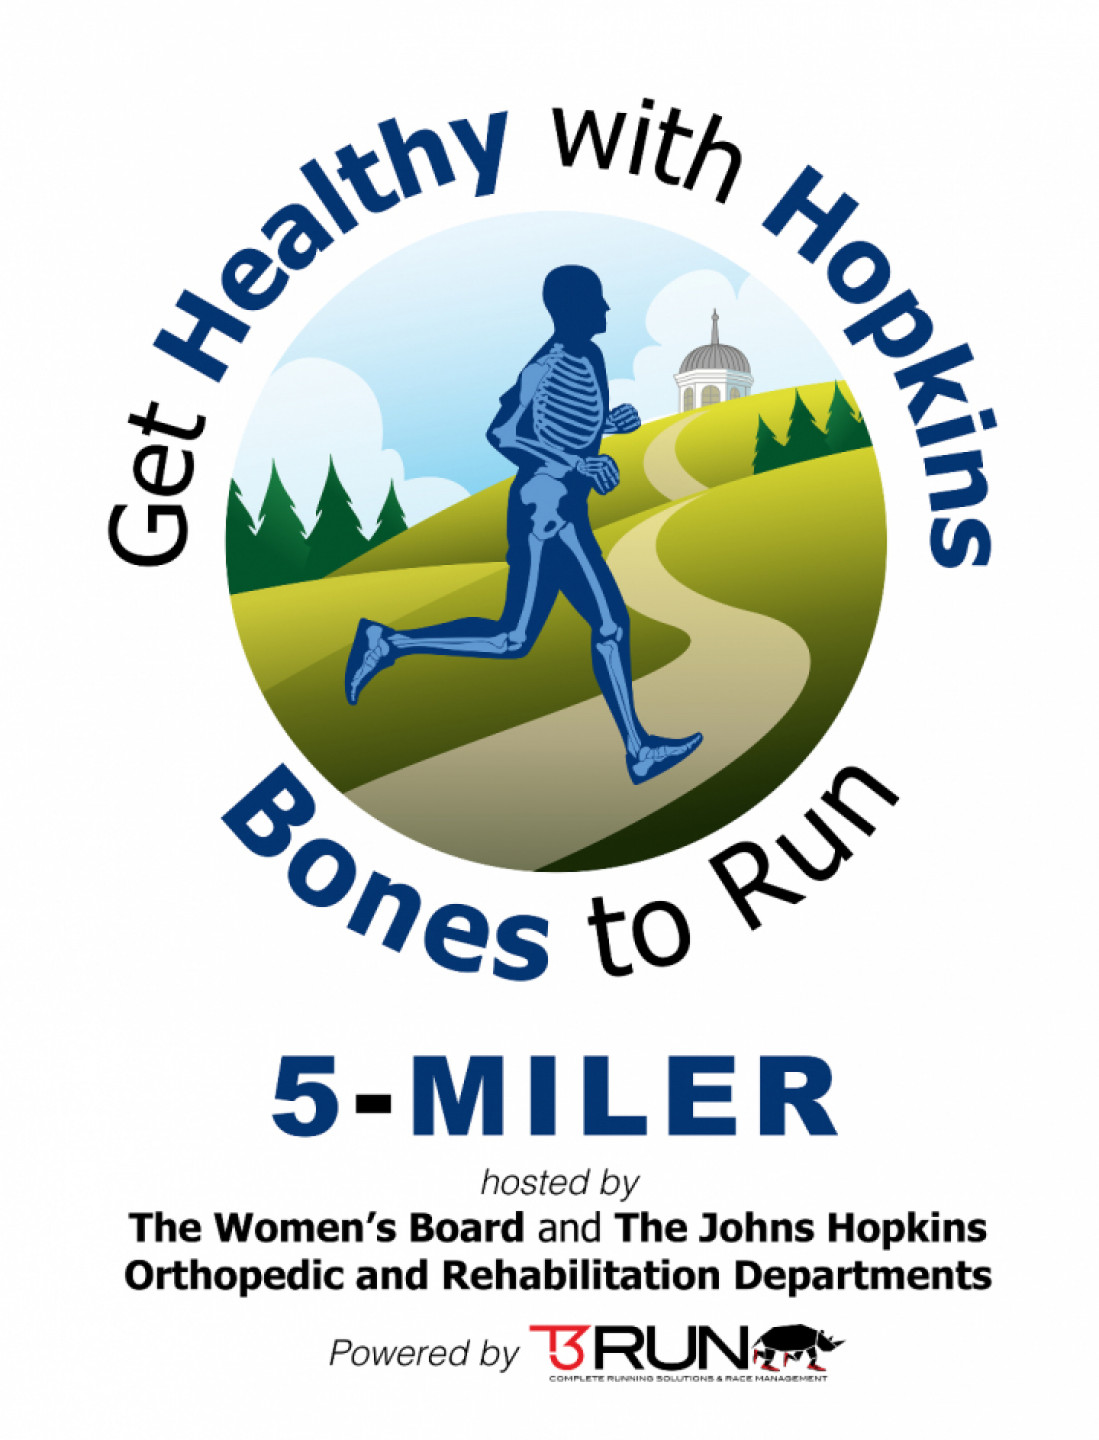  Get Healthy with Hopkins - Bones to Run 5-Miler and Fun Run/Walk